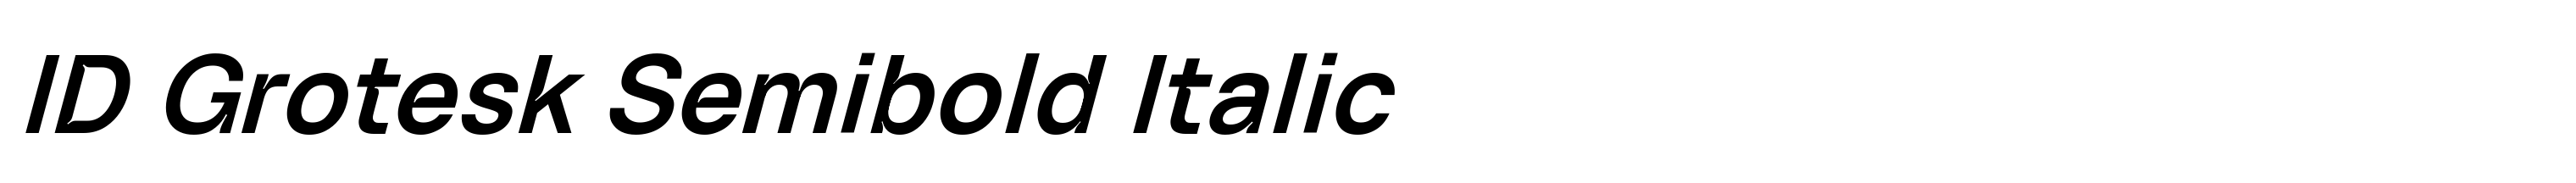 ID Grotesk Semibold Italic